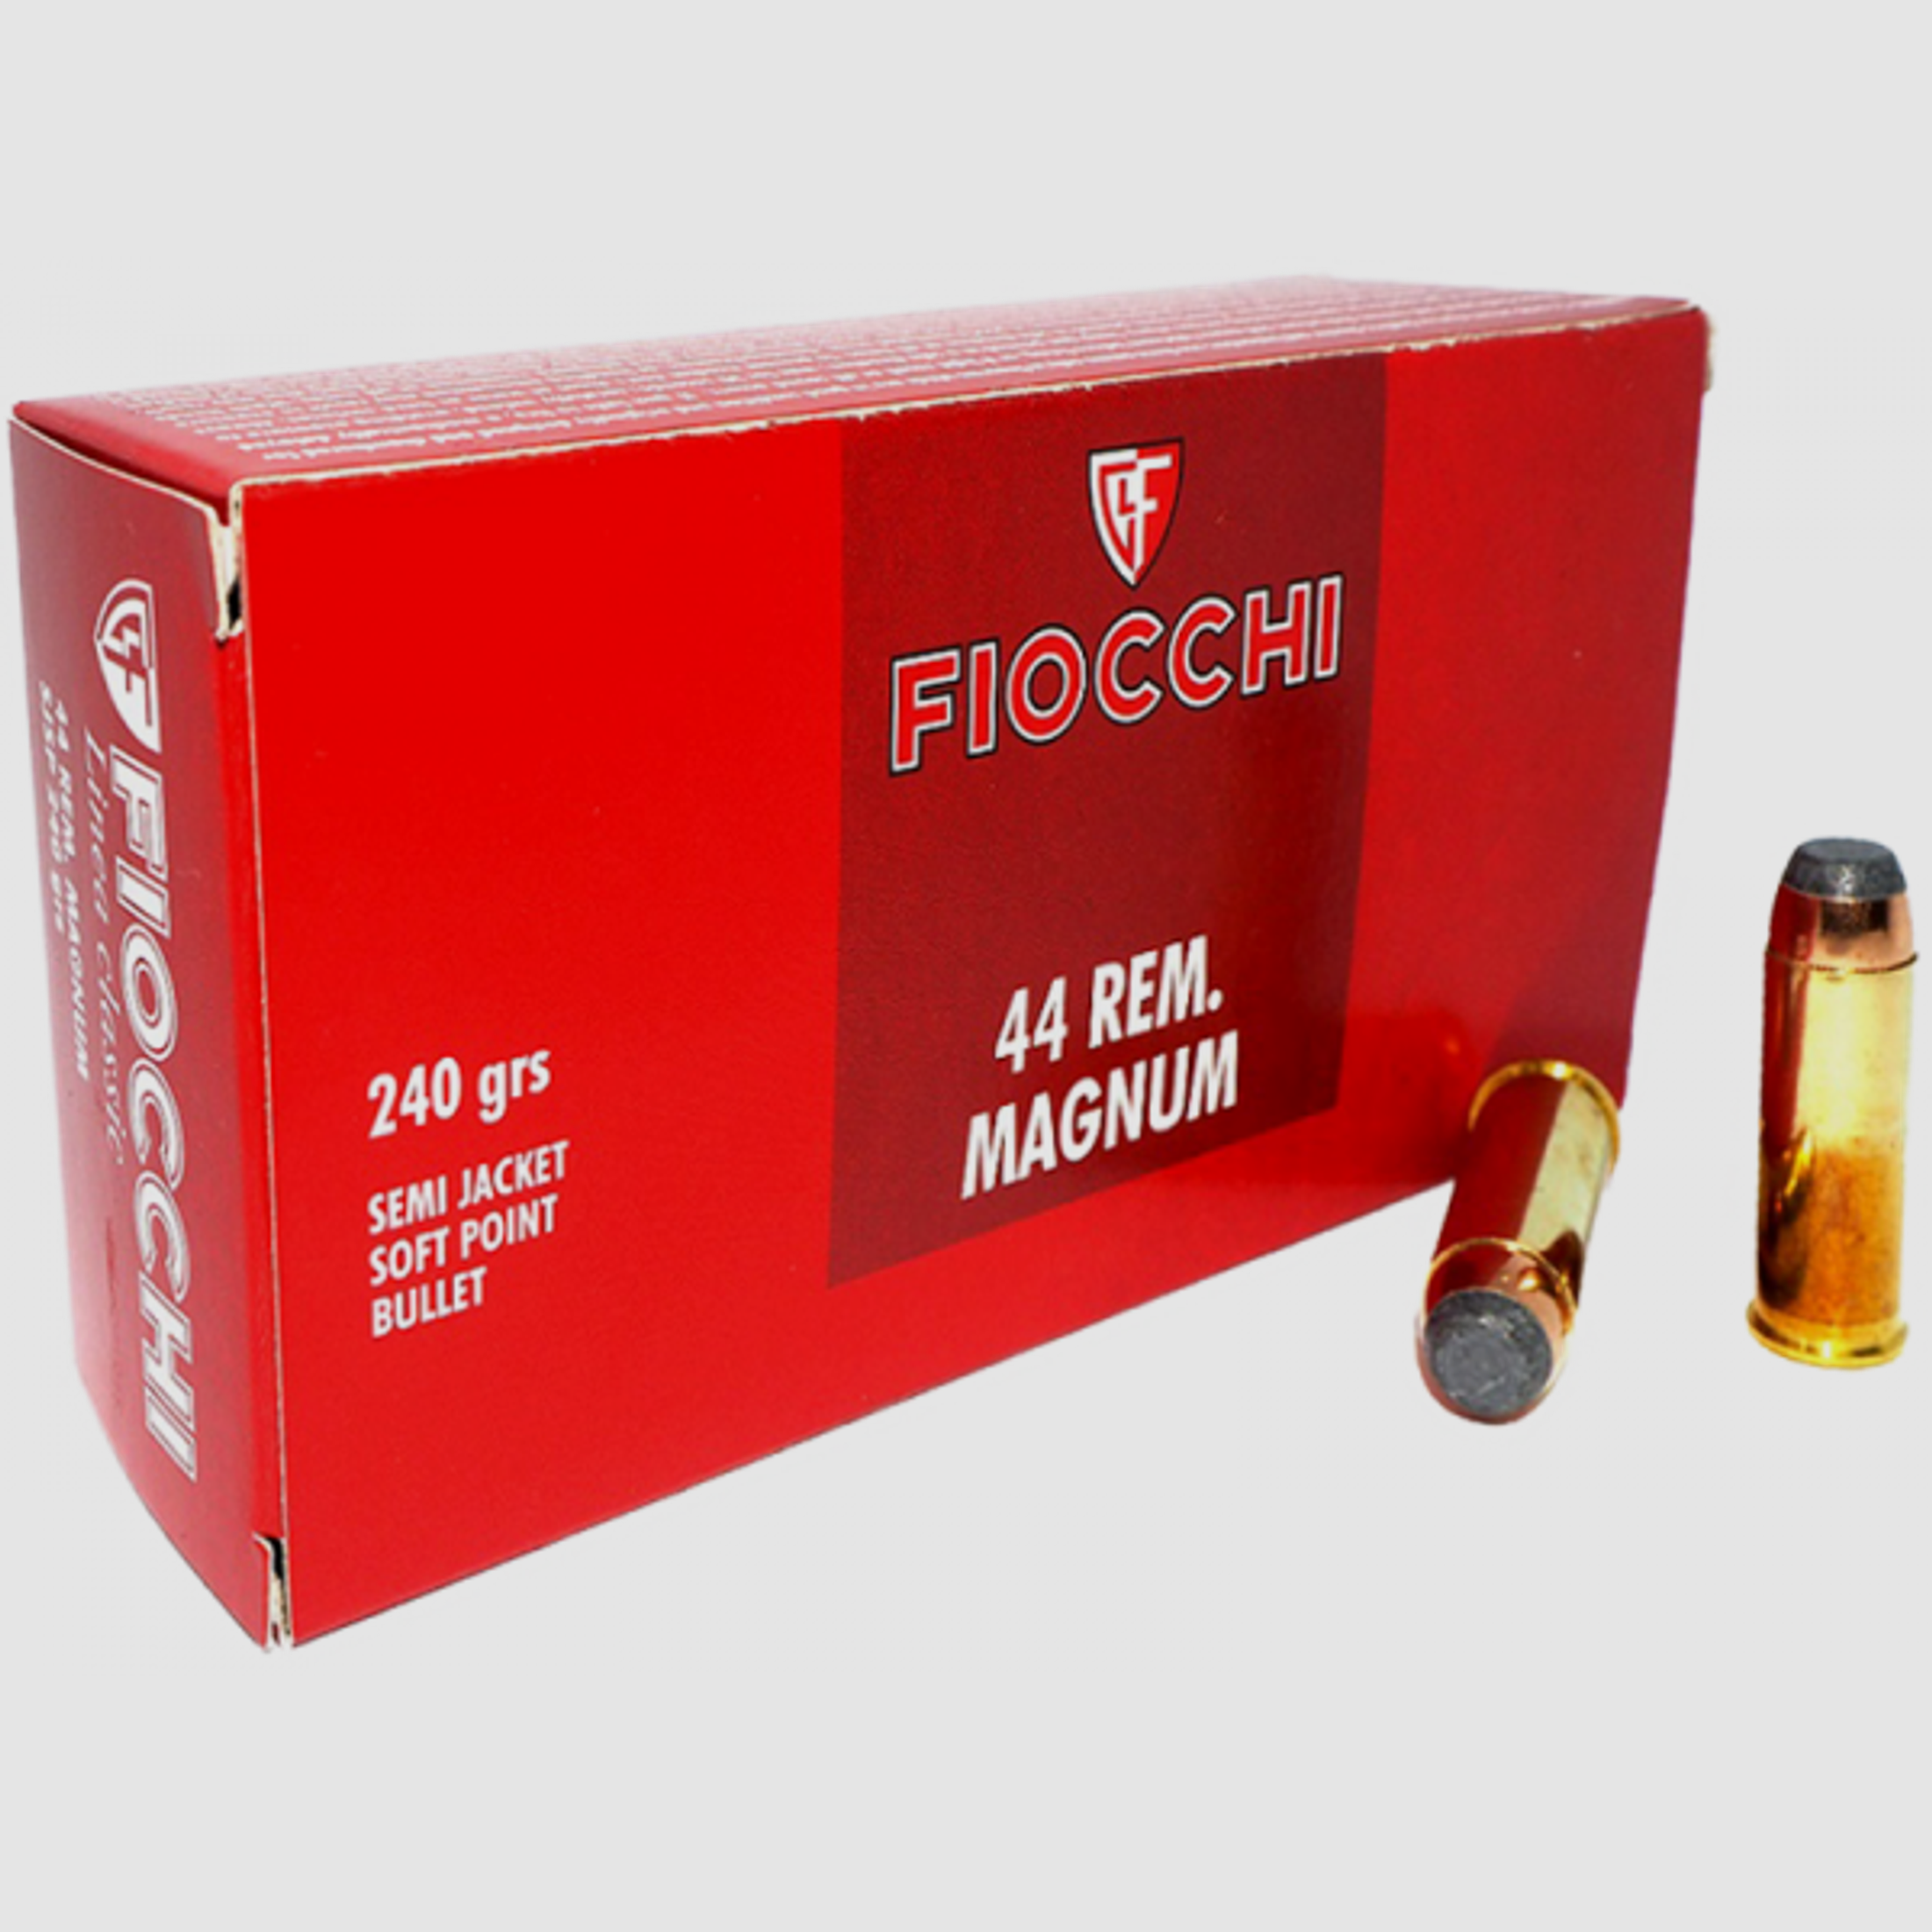 Fiocchi Classic .44 Rem Mag SJSP 240 grs Revolverpatronen